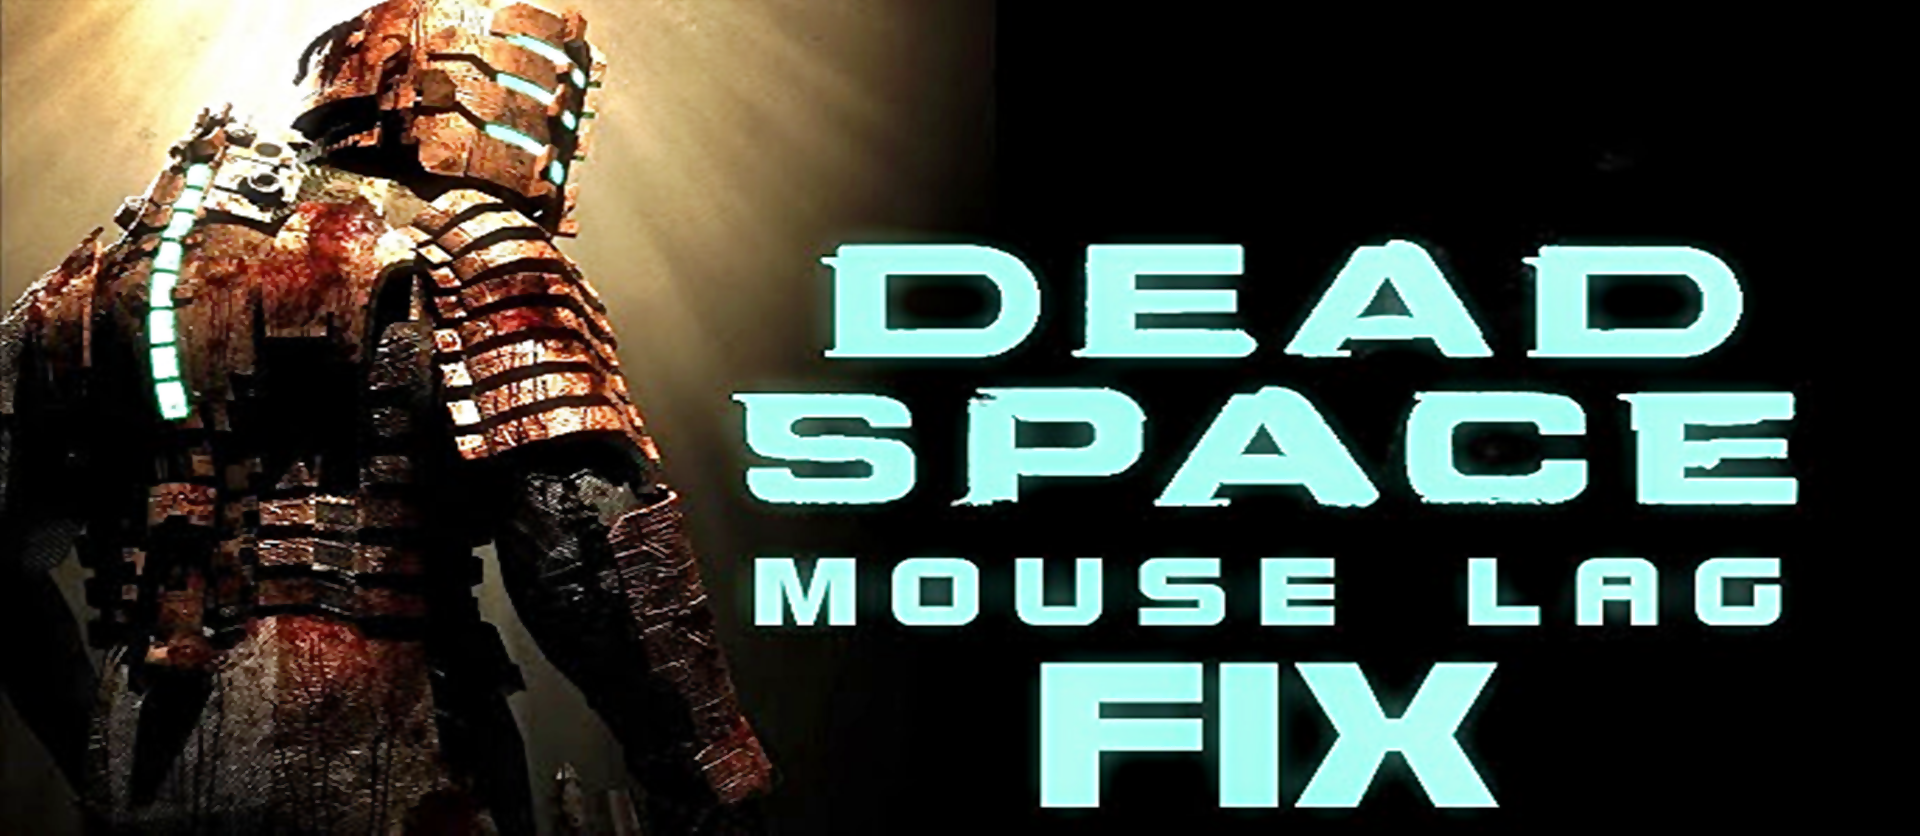 Dead Space Mouse Lag Fix Conserte Sua Mira